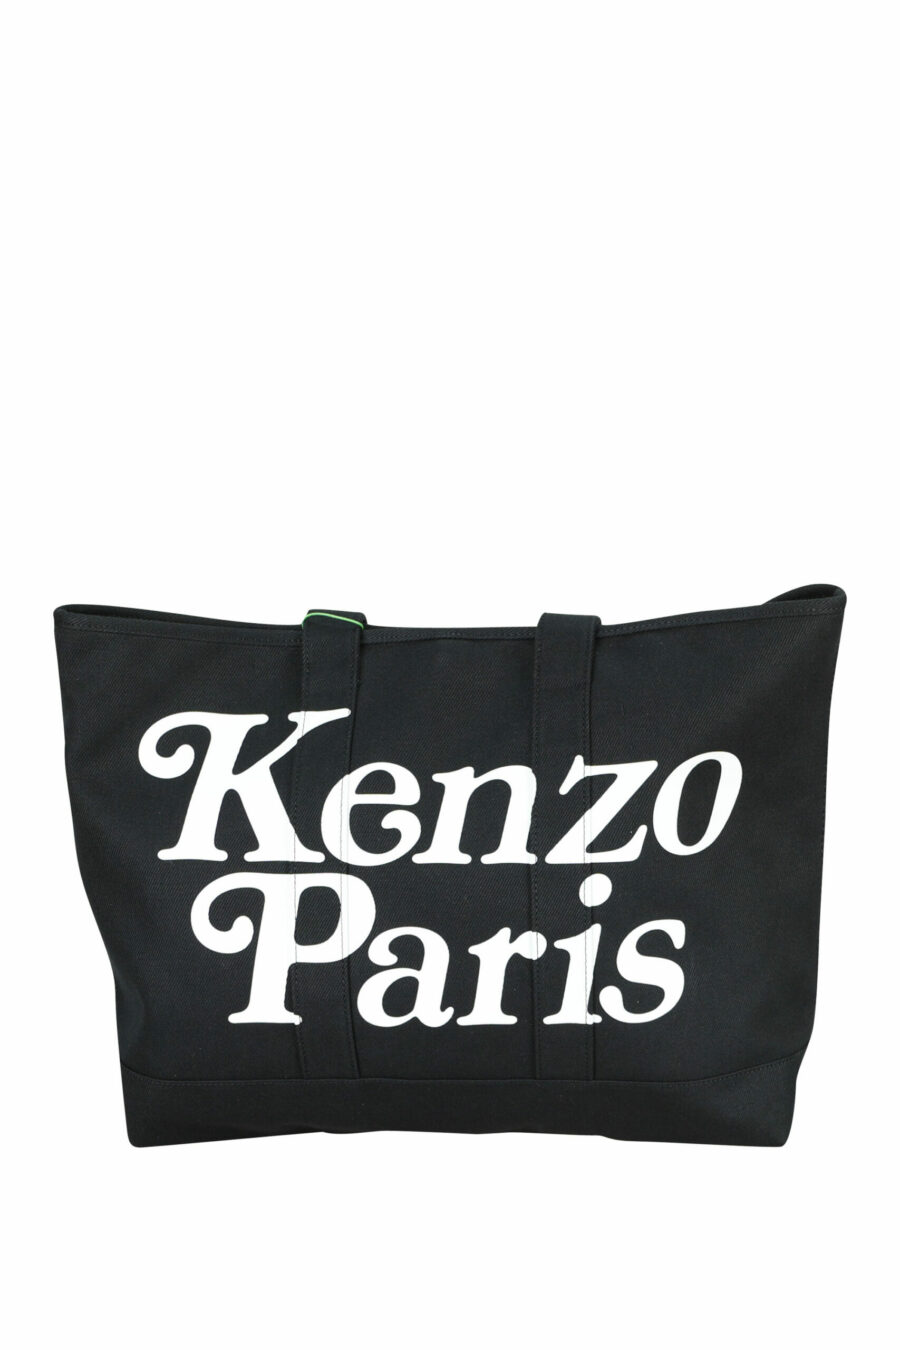 Tote bag black with maxilogo "kenzo utility" - 3612230581388 scaled